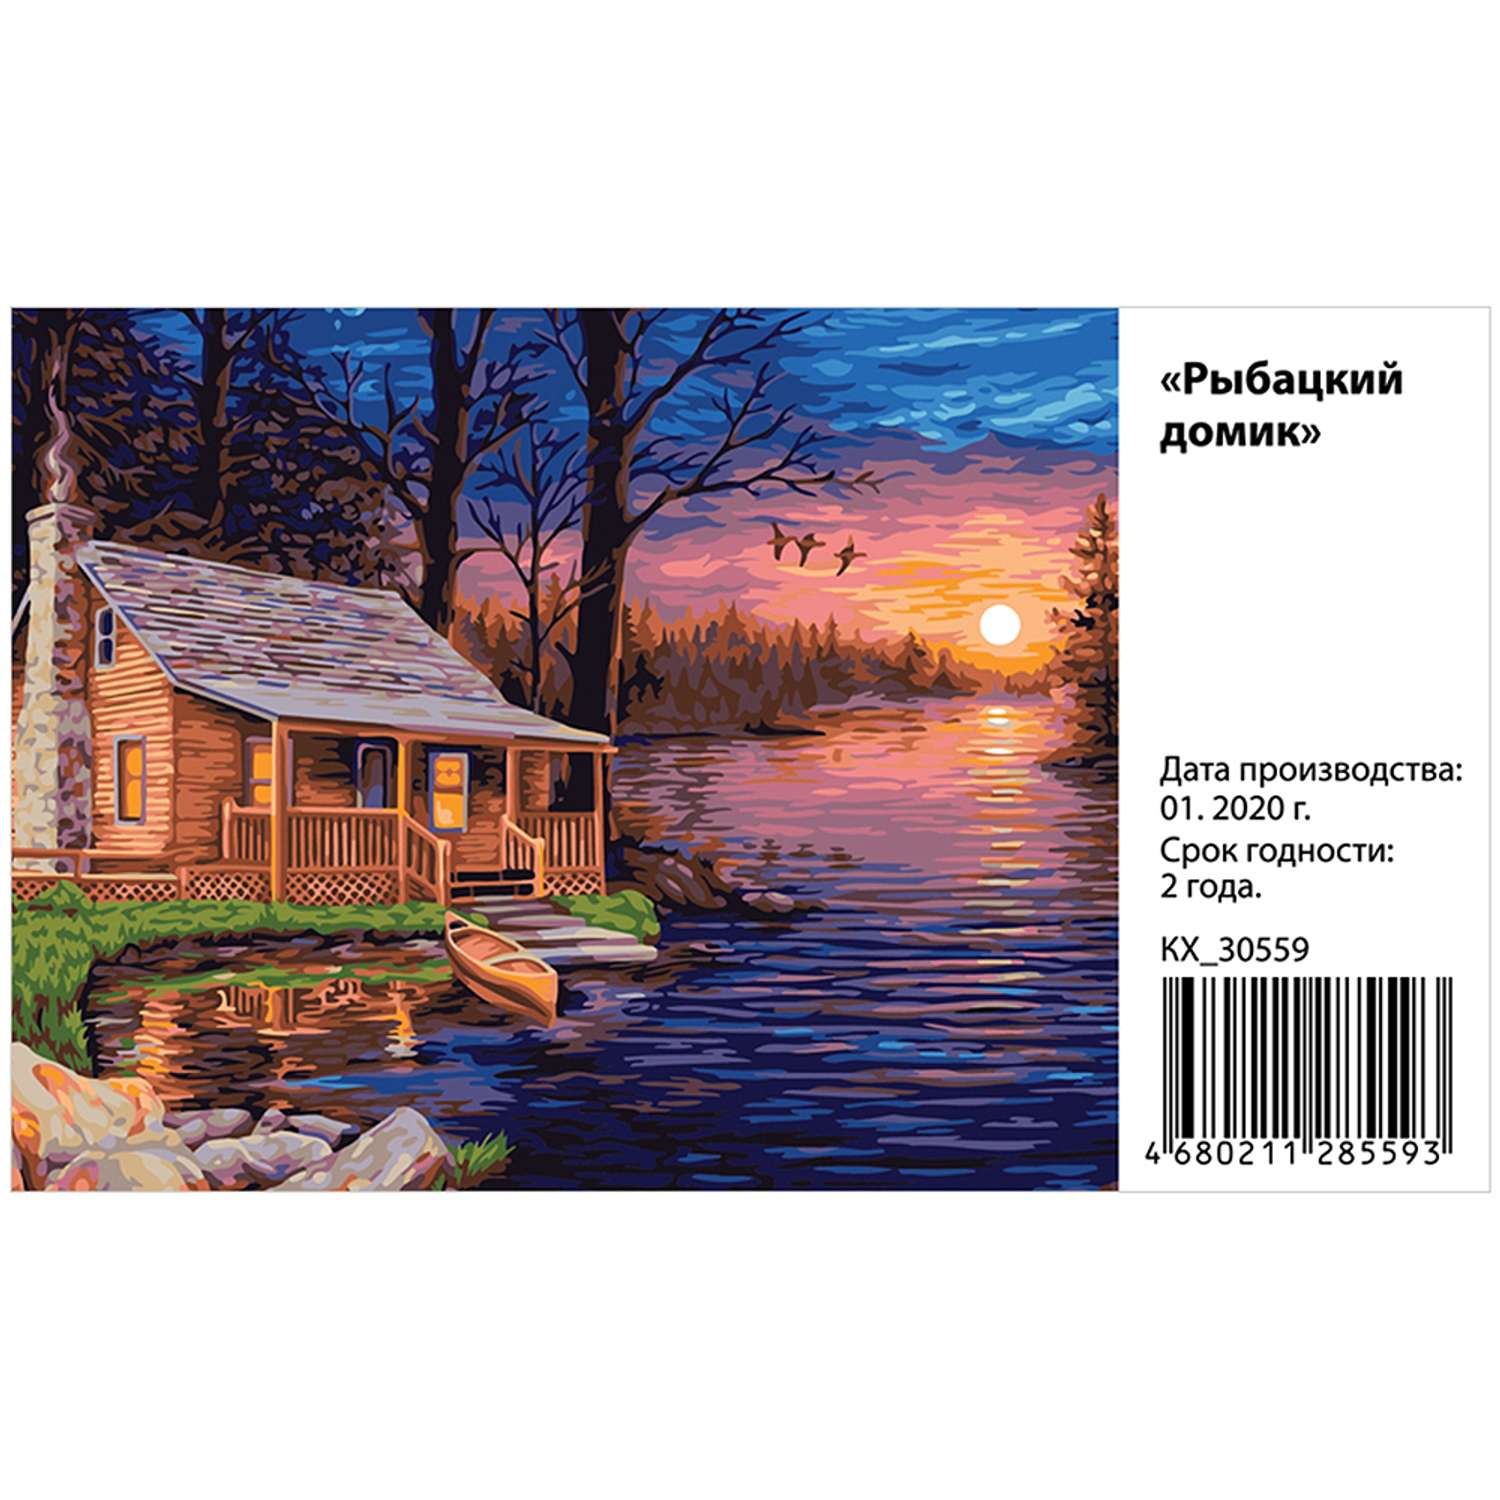 Картина по номерам Greenwich Line Рыбацкий домик 40*50см с акриловыми красками - фото 3